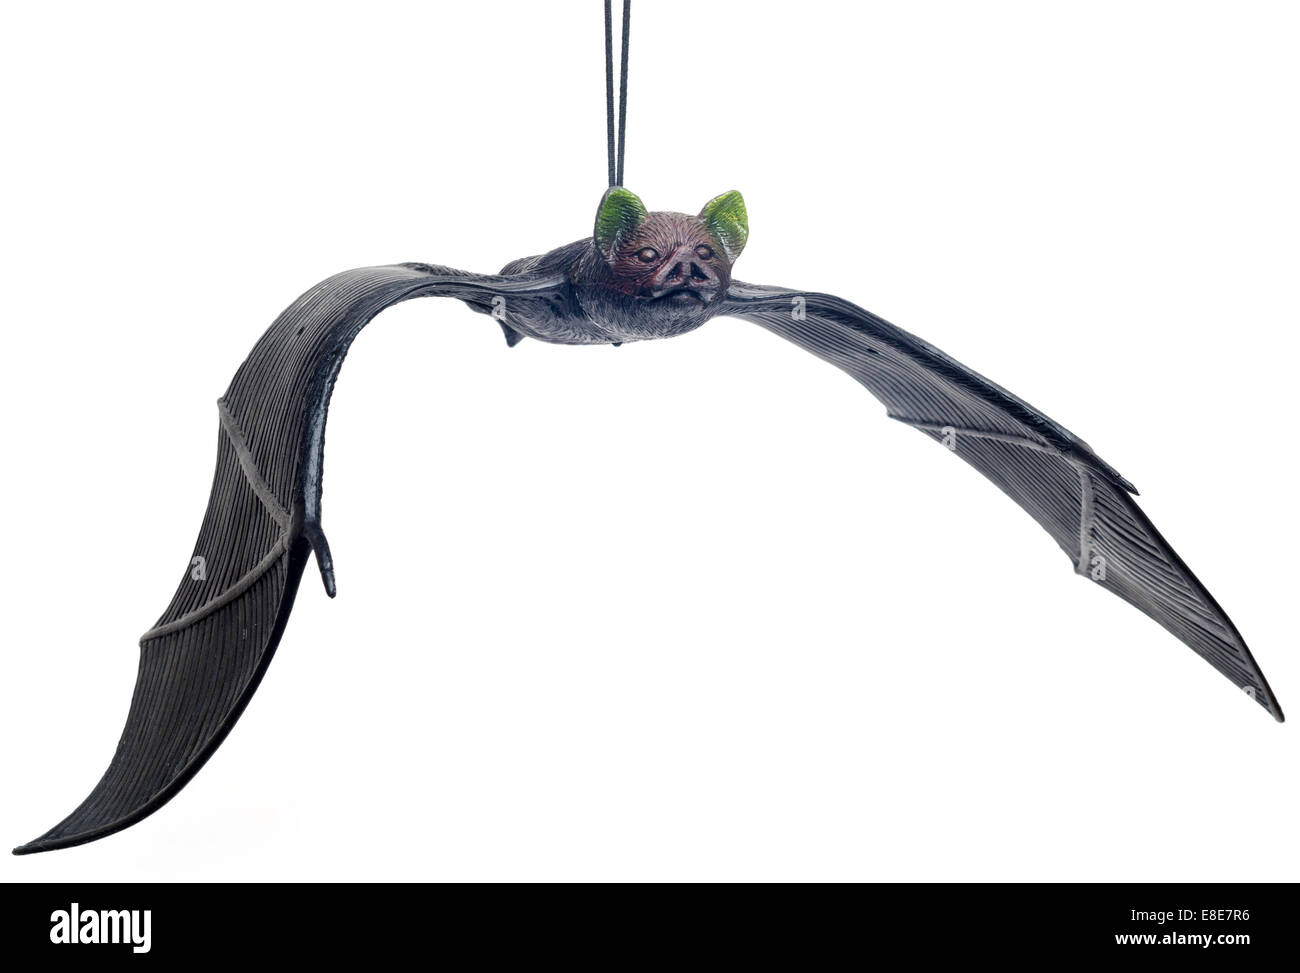 Toy bat on elastic Stock Photo